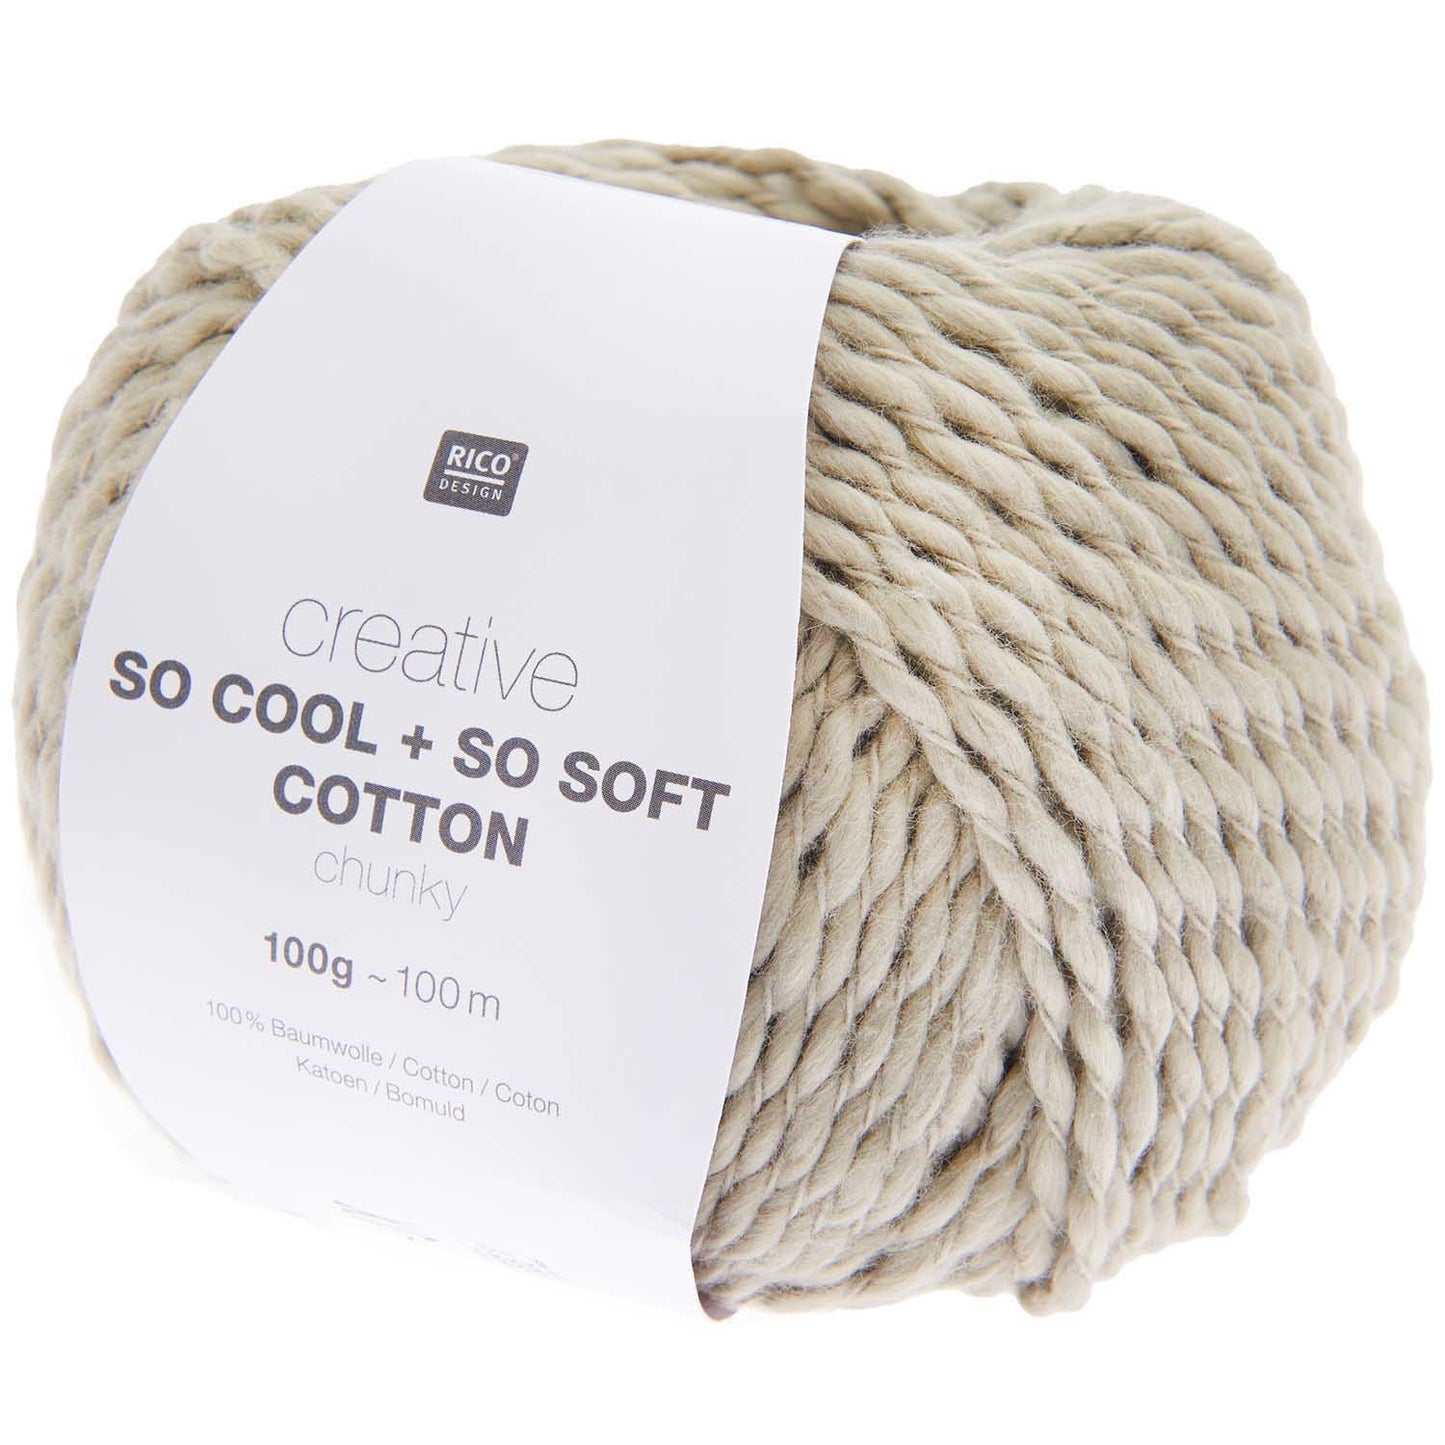 So Cool + So Soft Cotton chunky - staub